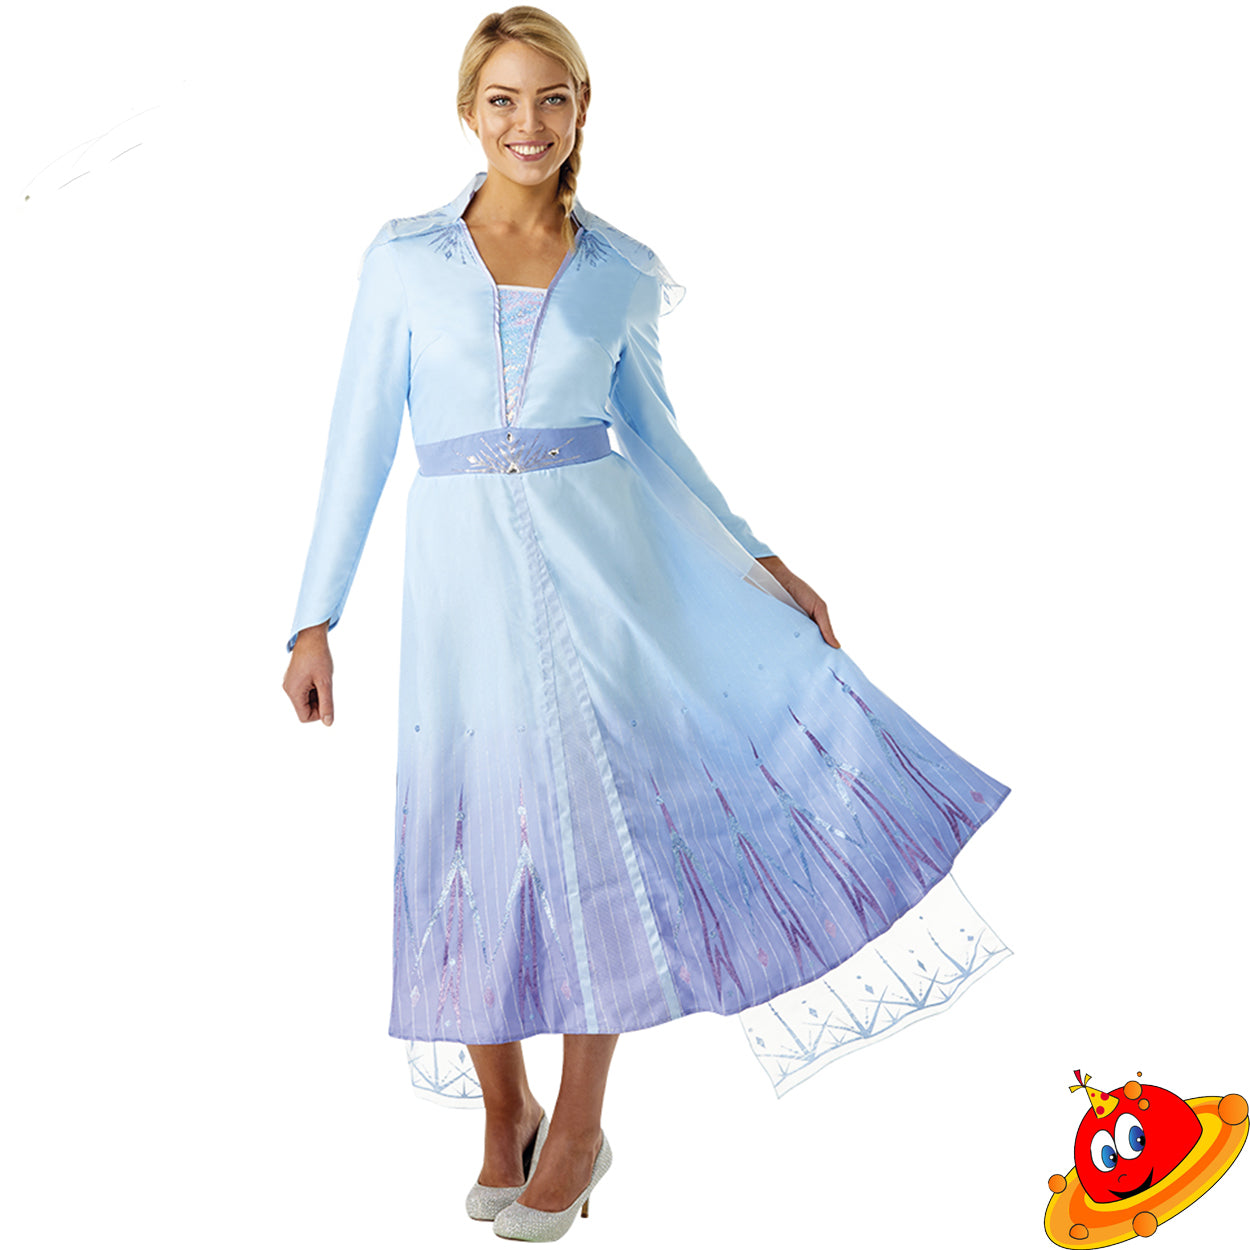 Costume Donna Elsa Frozen Disney Tg 36/42